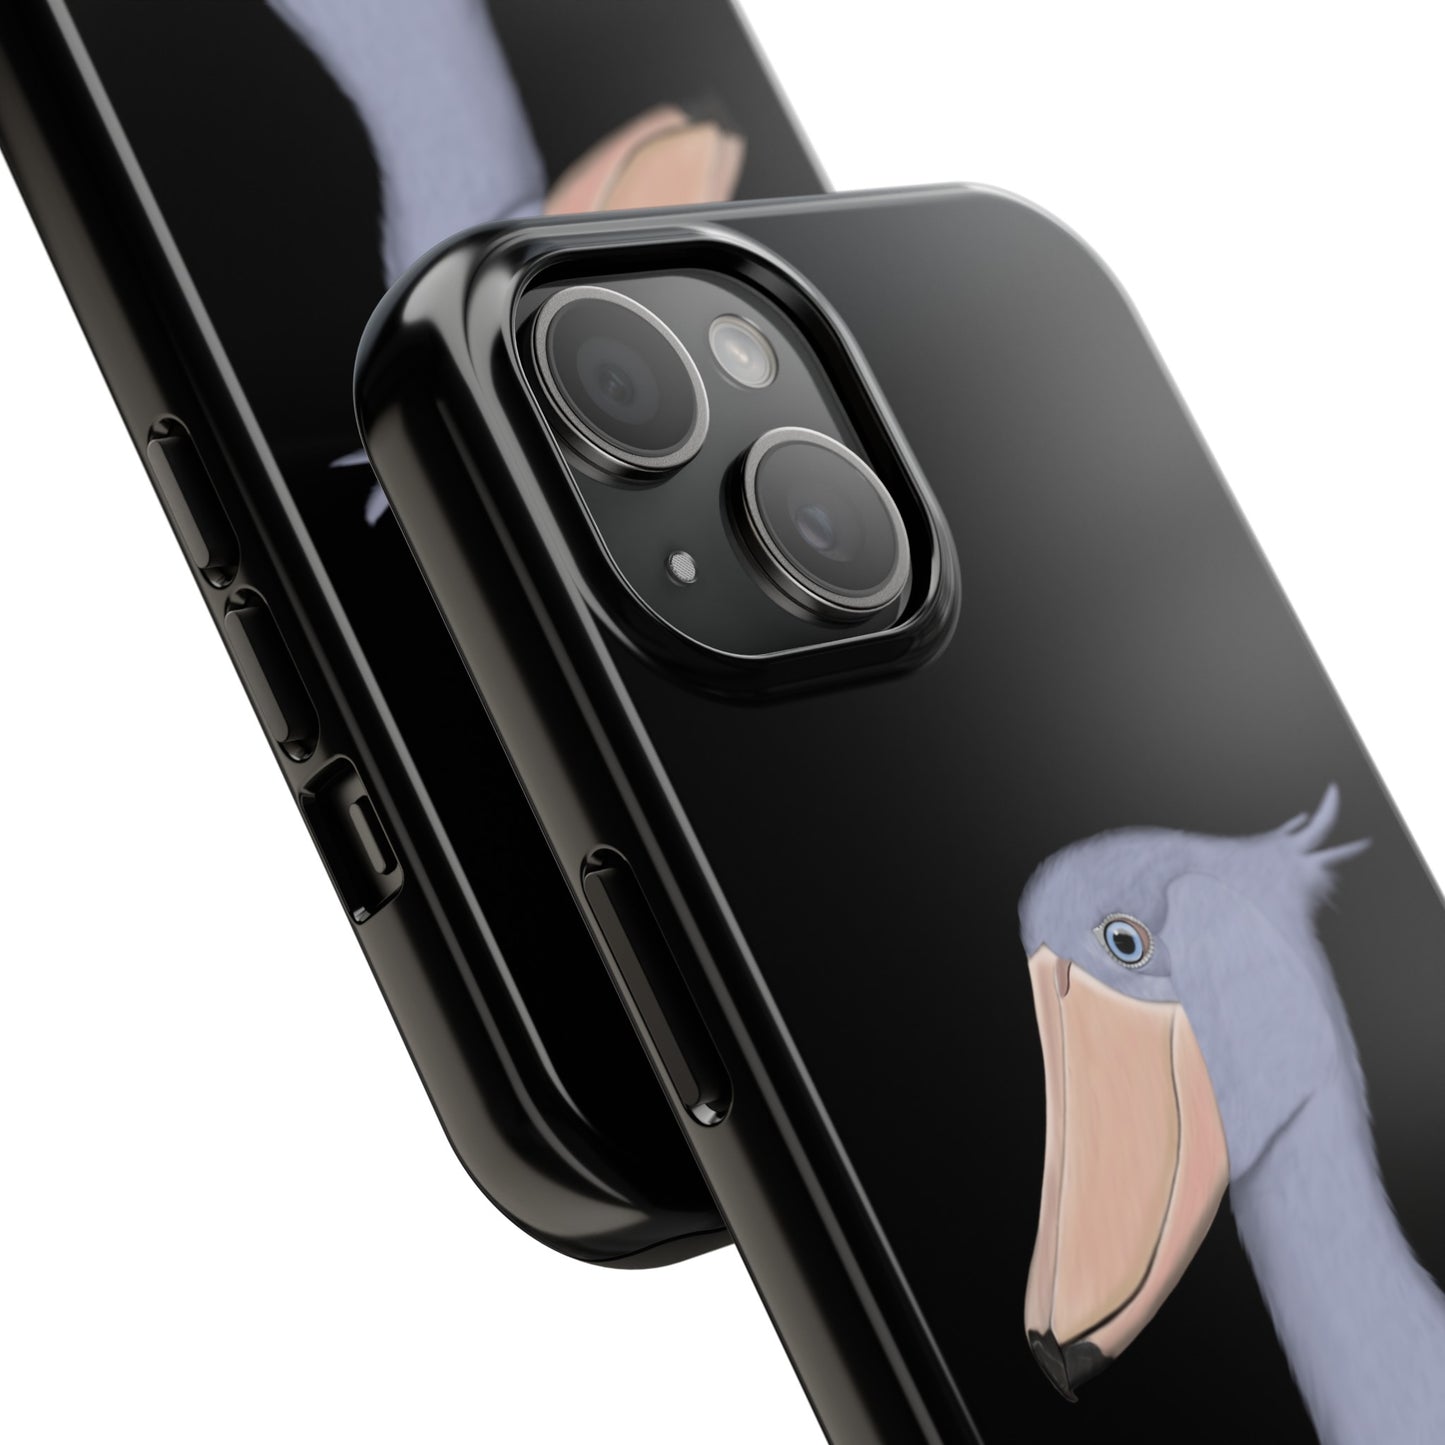 Shoebill Bird Art Tough Phone Case Black